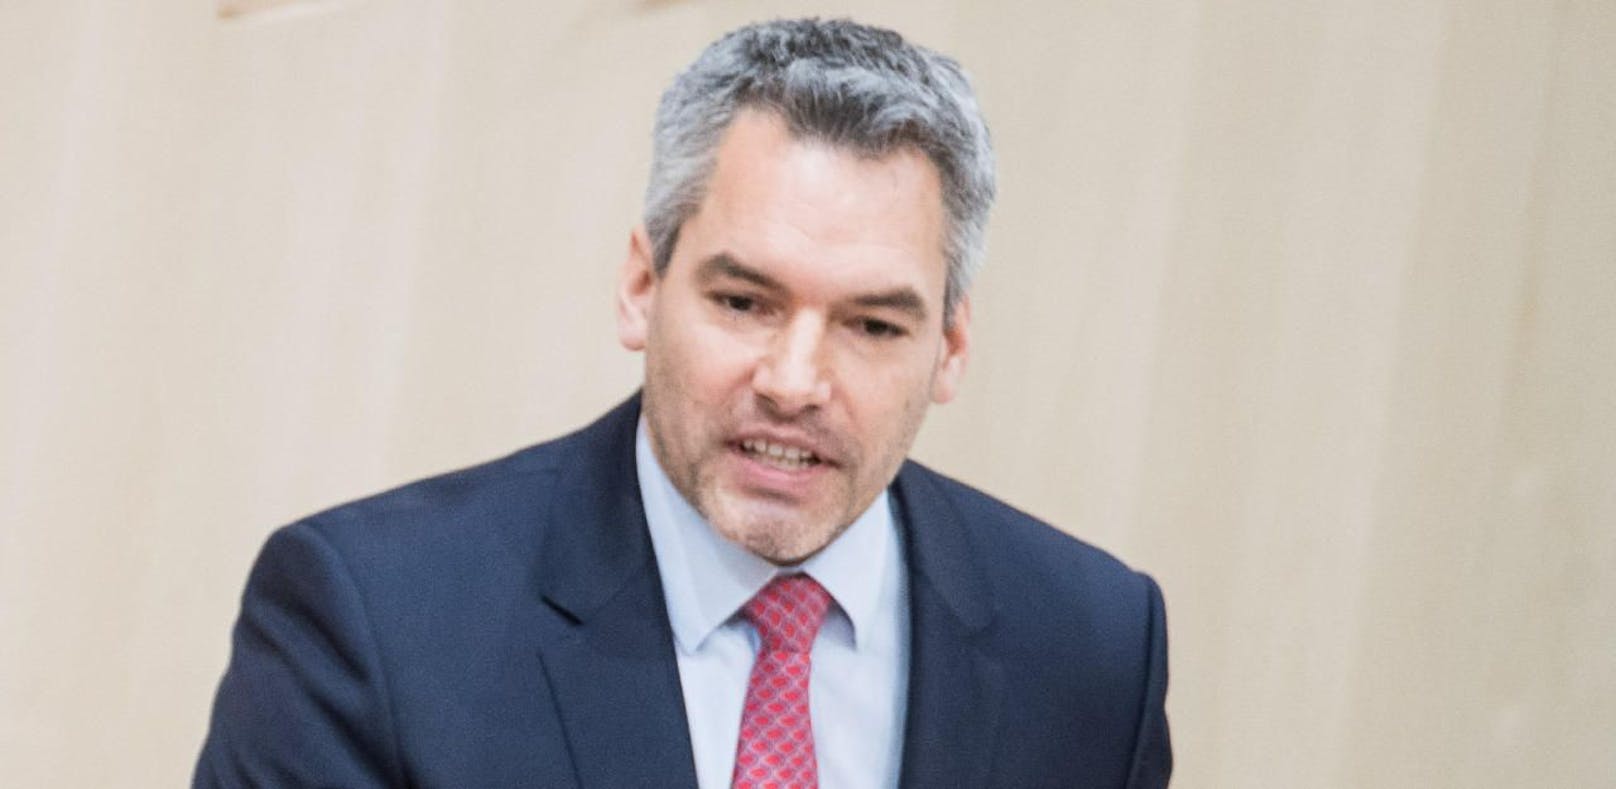 ÖVP-Generalsekretär Karl Nehammer fordert Offenlegung der Parteispenden.